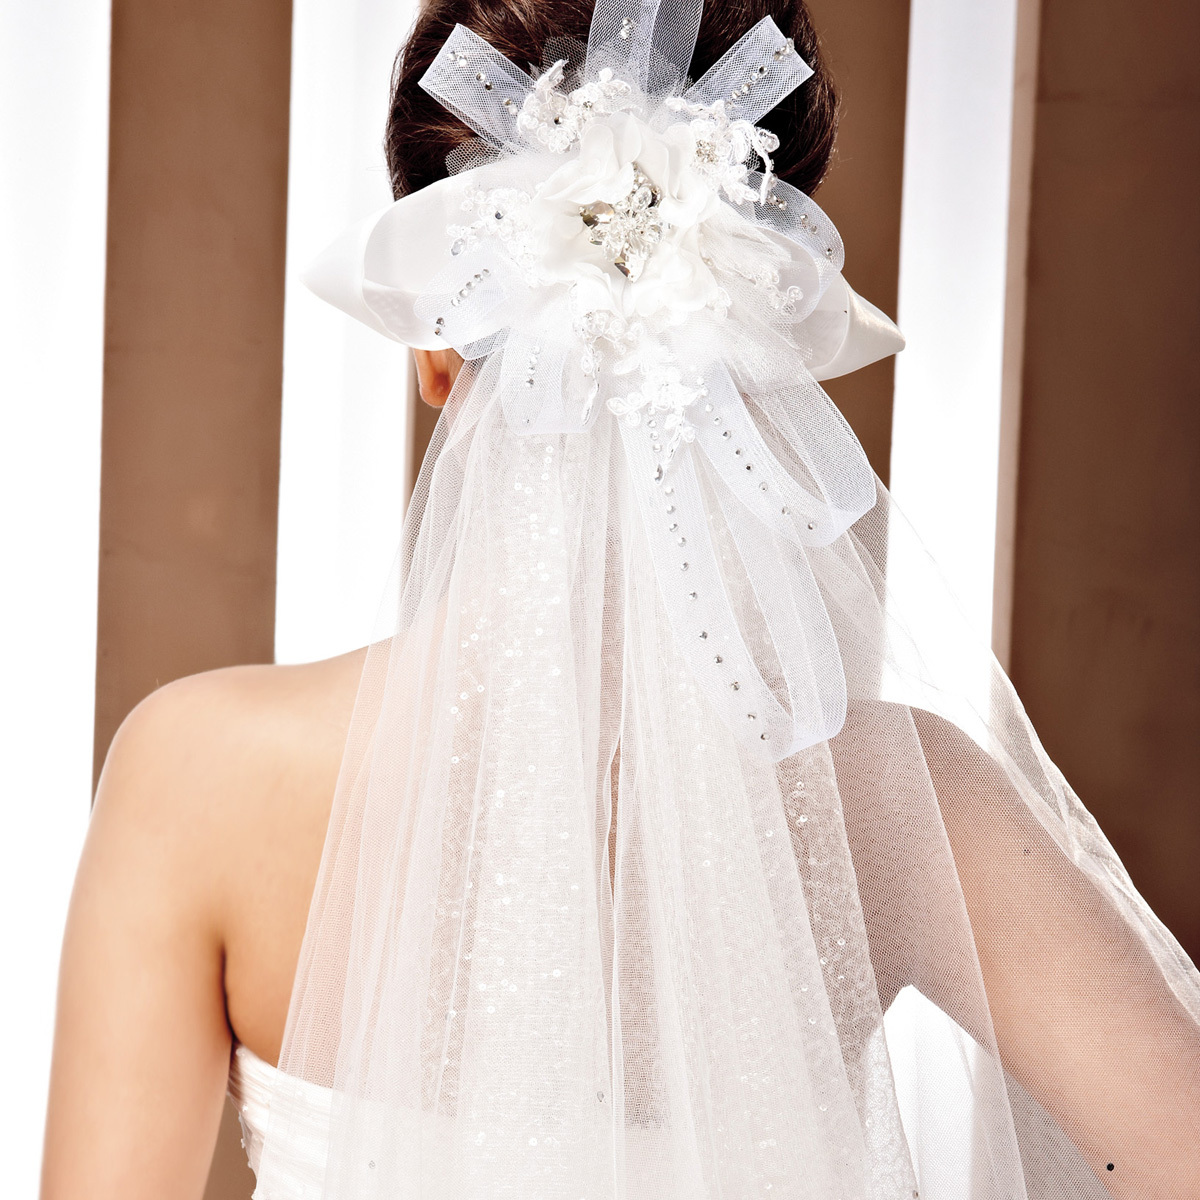 Coniefox personalized wedding veil diamond fabric handmade quality customize multi-layer veil b208